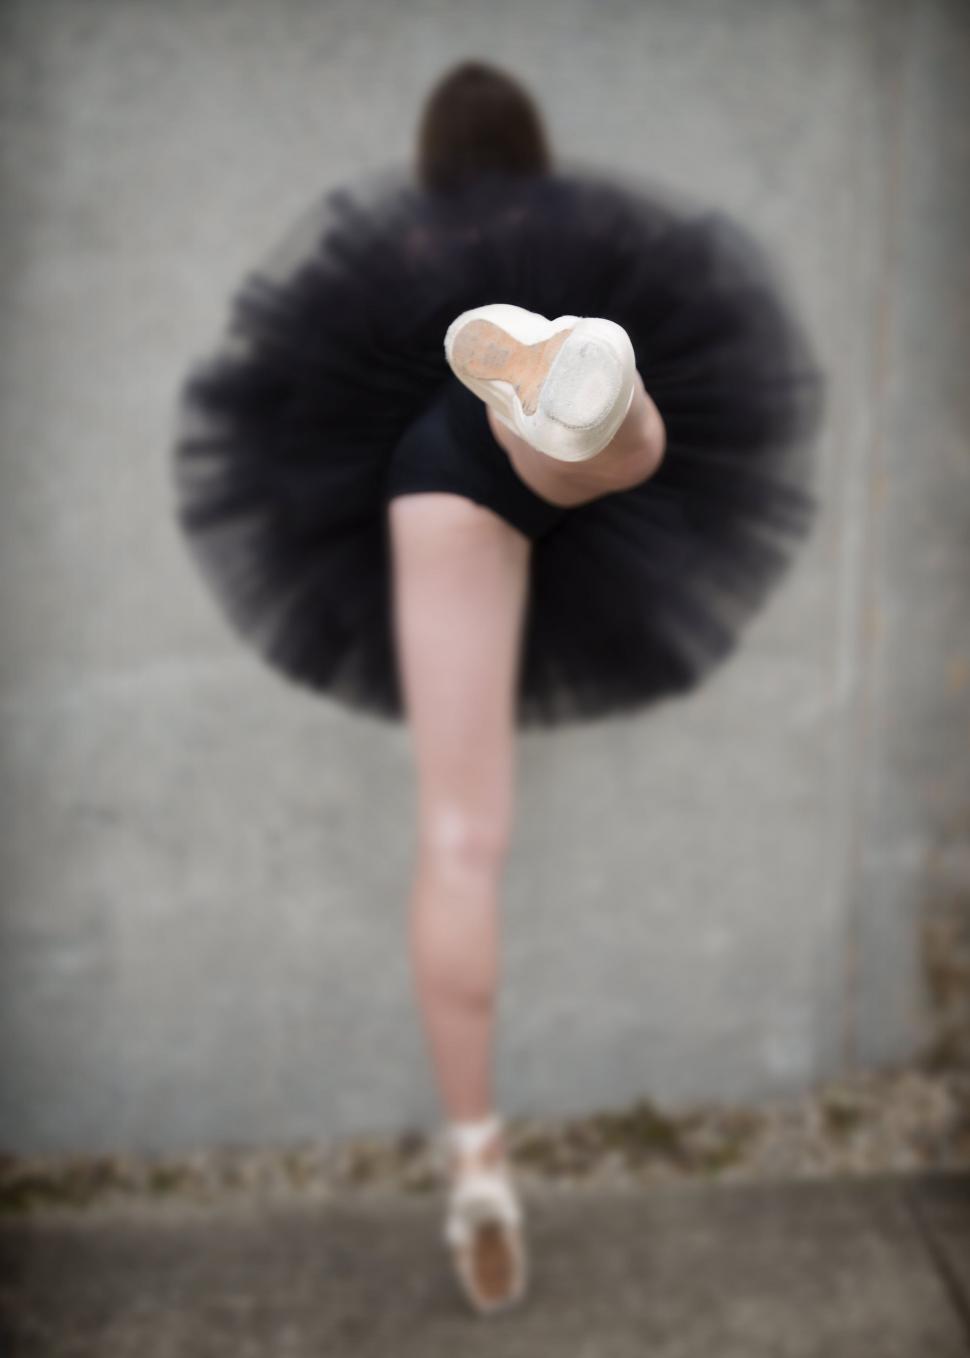 Free Image of Blur view of Ballet dancer 